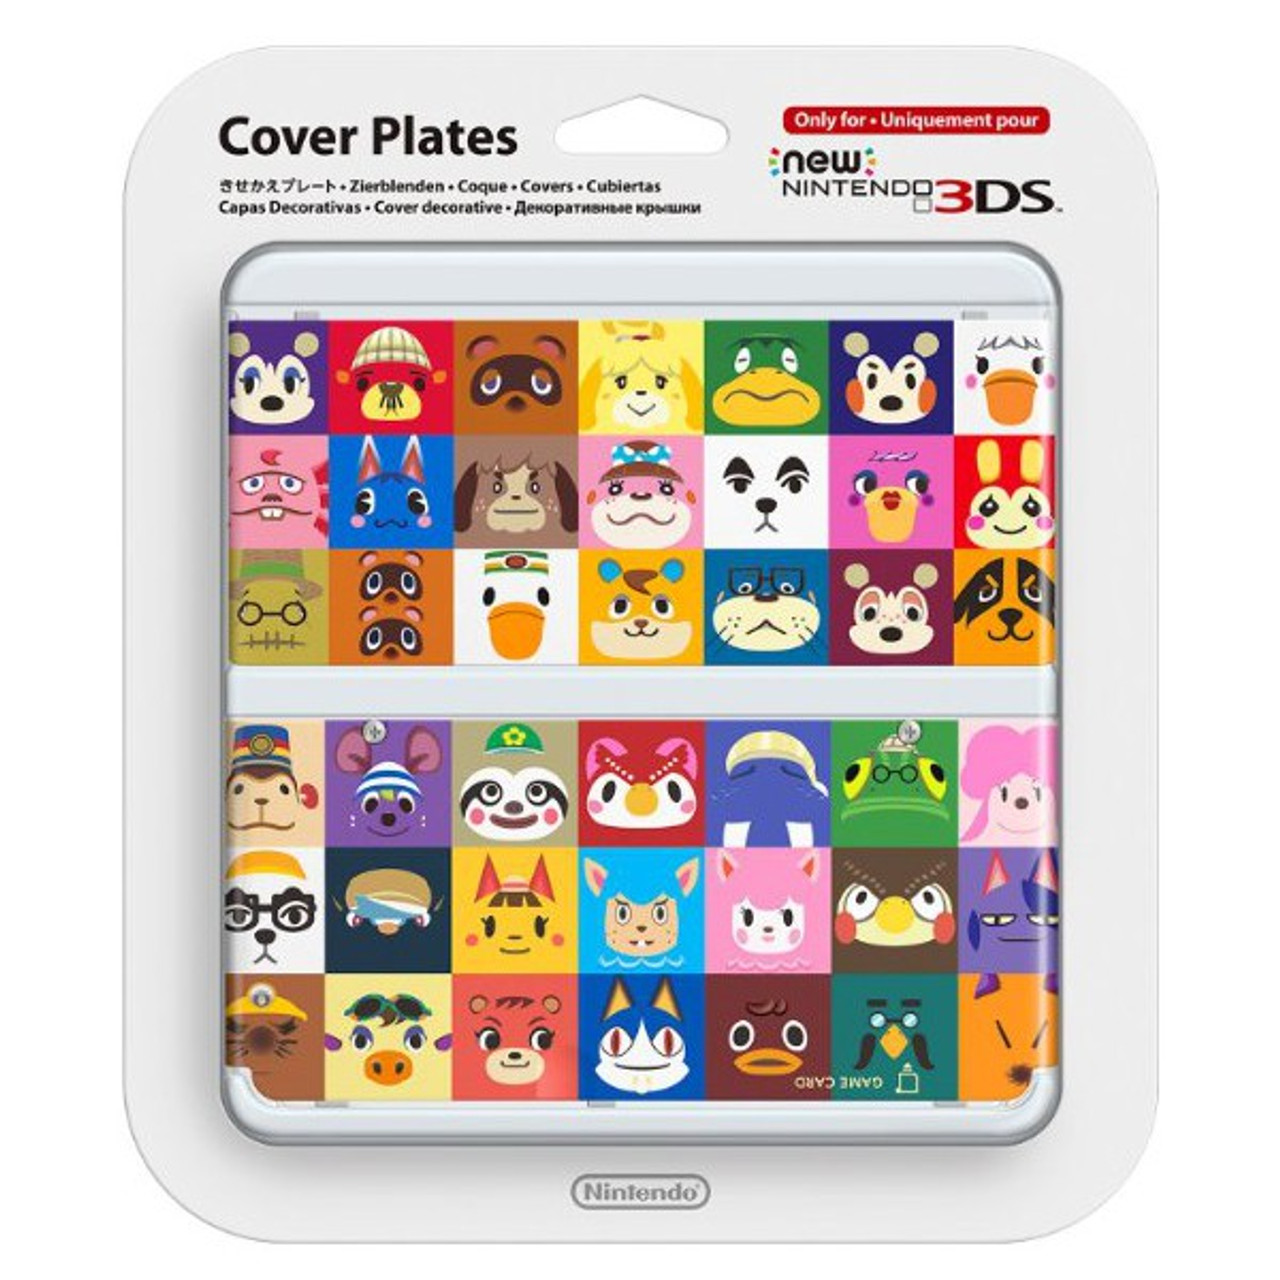 Afvise Blive gift Forespørgsel NEW NINTENDO 3DS COVER PLATES - N. 068 ANIMAL CROSSING - Videogamesnewyork